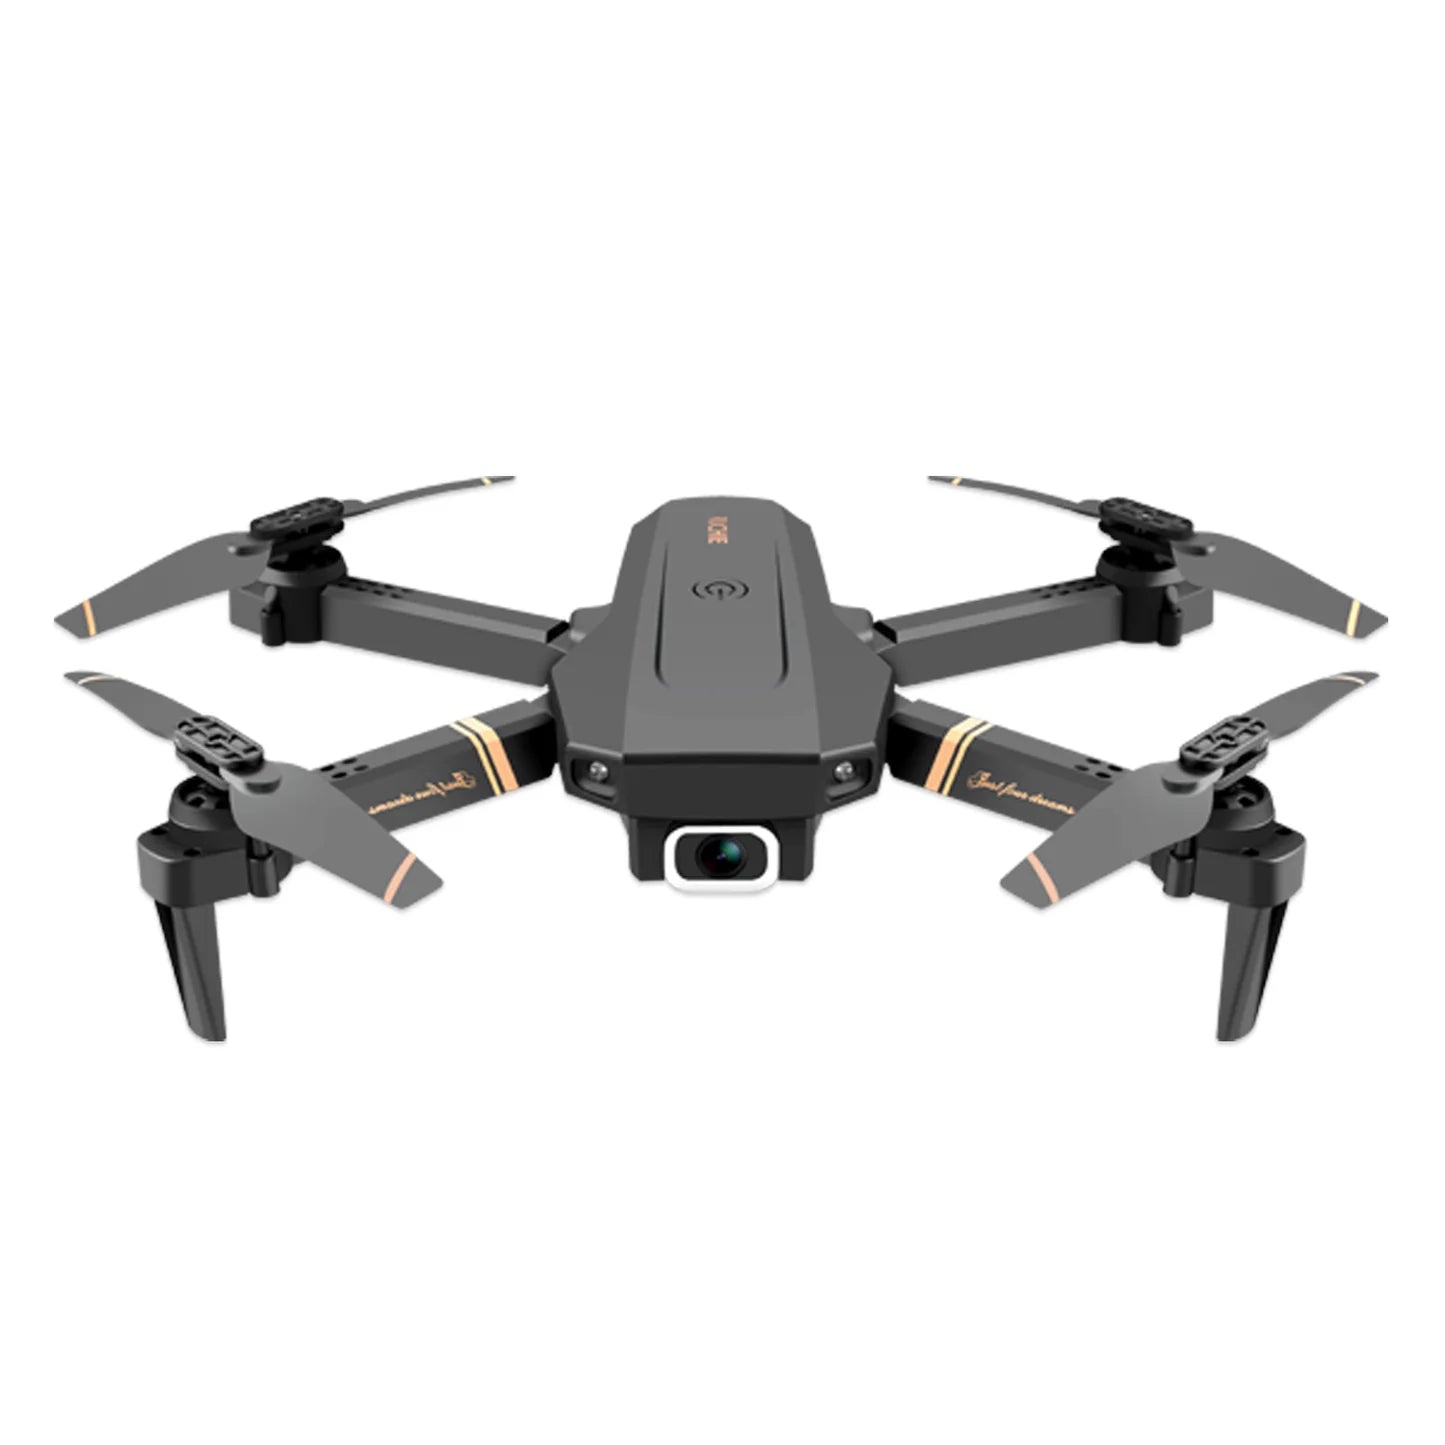 V4 Rc Drone - 4k HD Cámara gran angular 1080P WiFi fpv Drone Cámara dual Quadcopter Transmisión en tiempo real Helicóptero Dron Regalo Juguetes